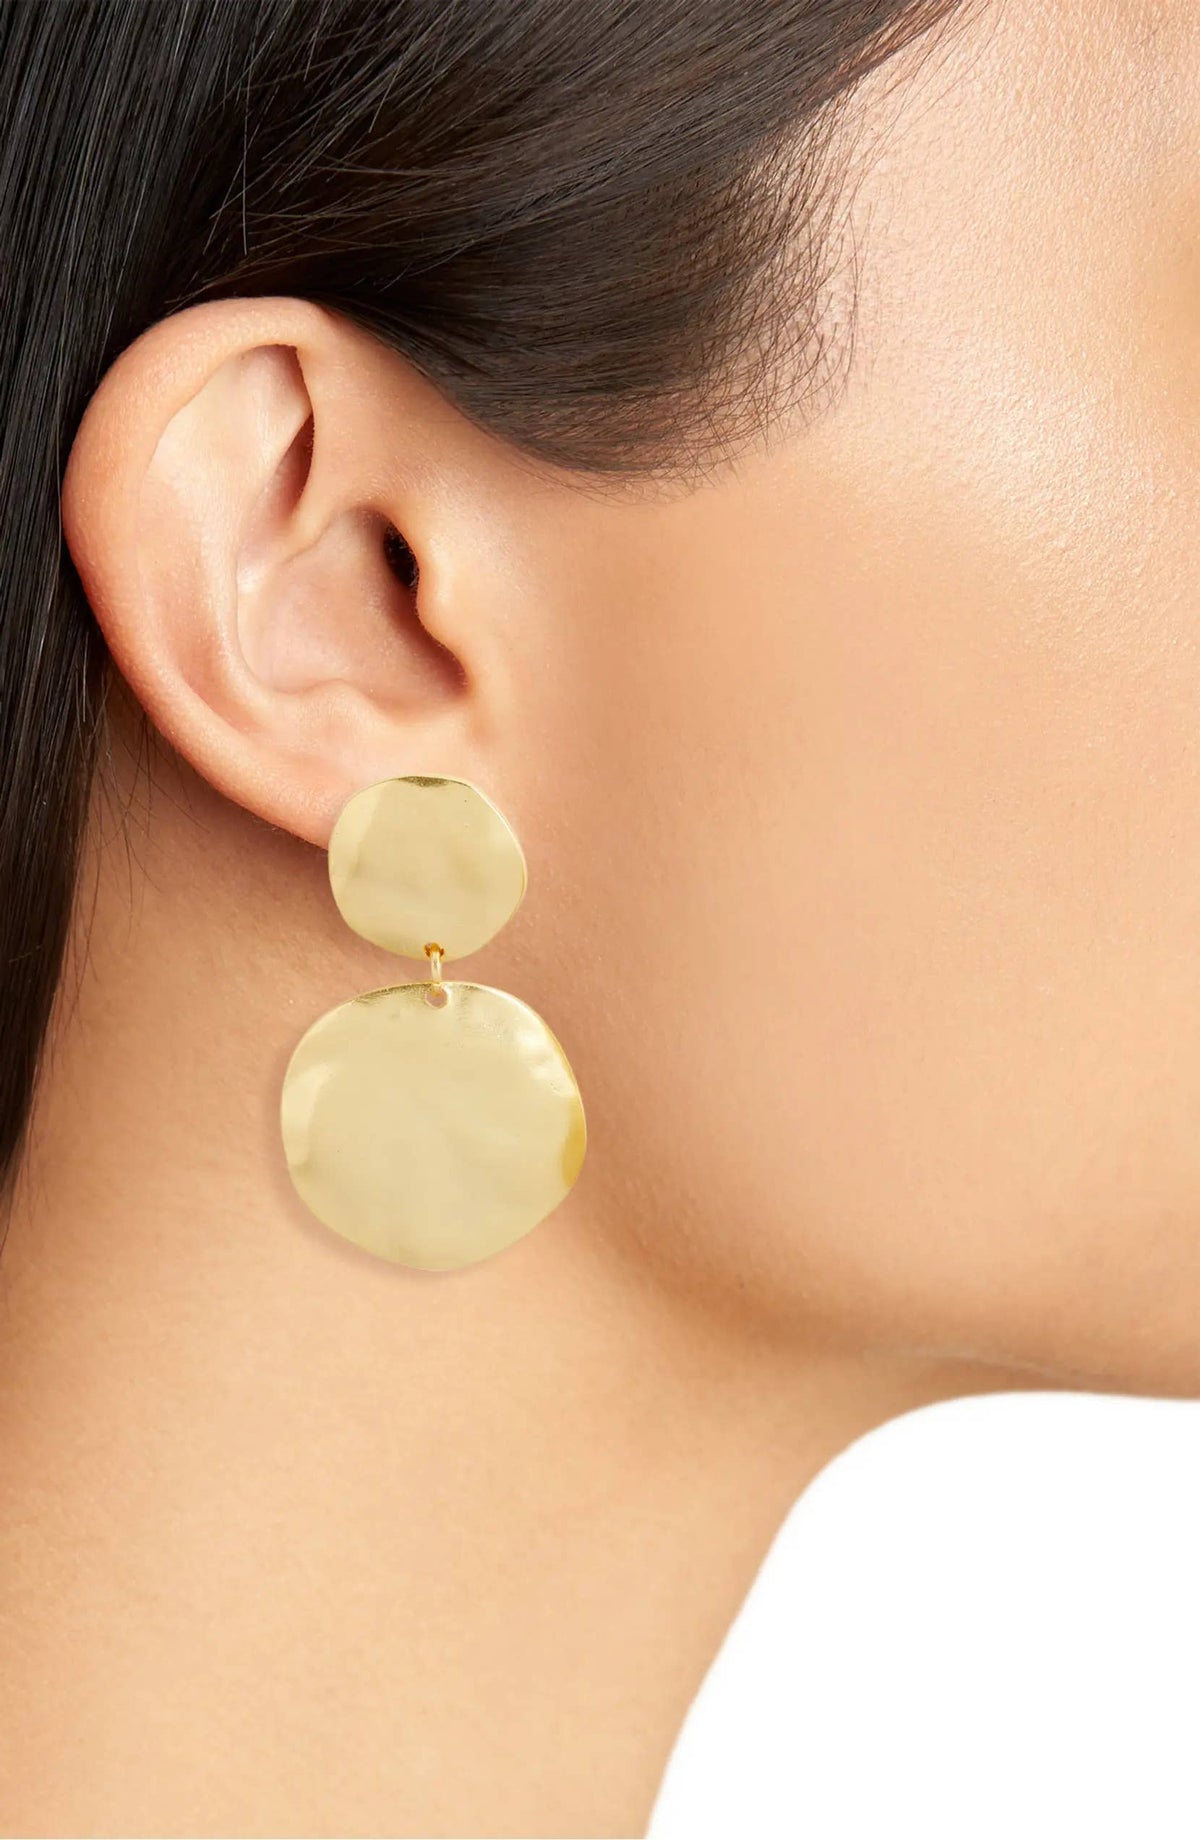 Clip-on Earrings | Irregular Discs Dangles - Silver | Karine Sultan